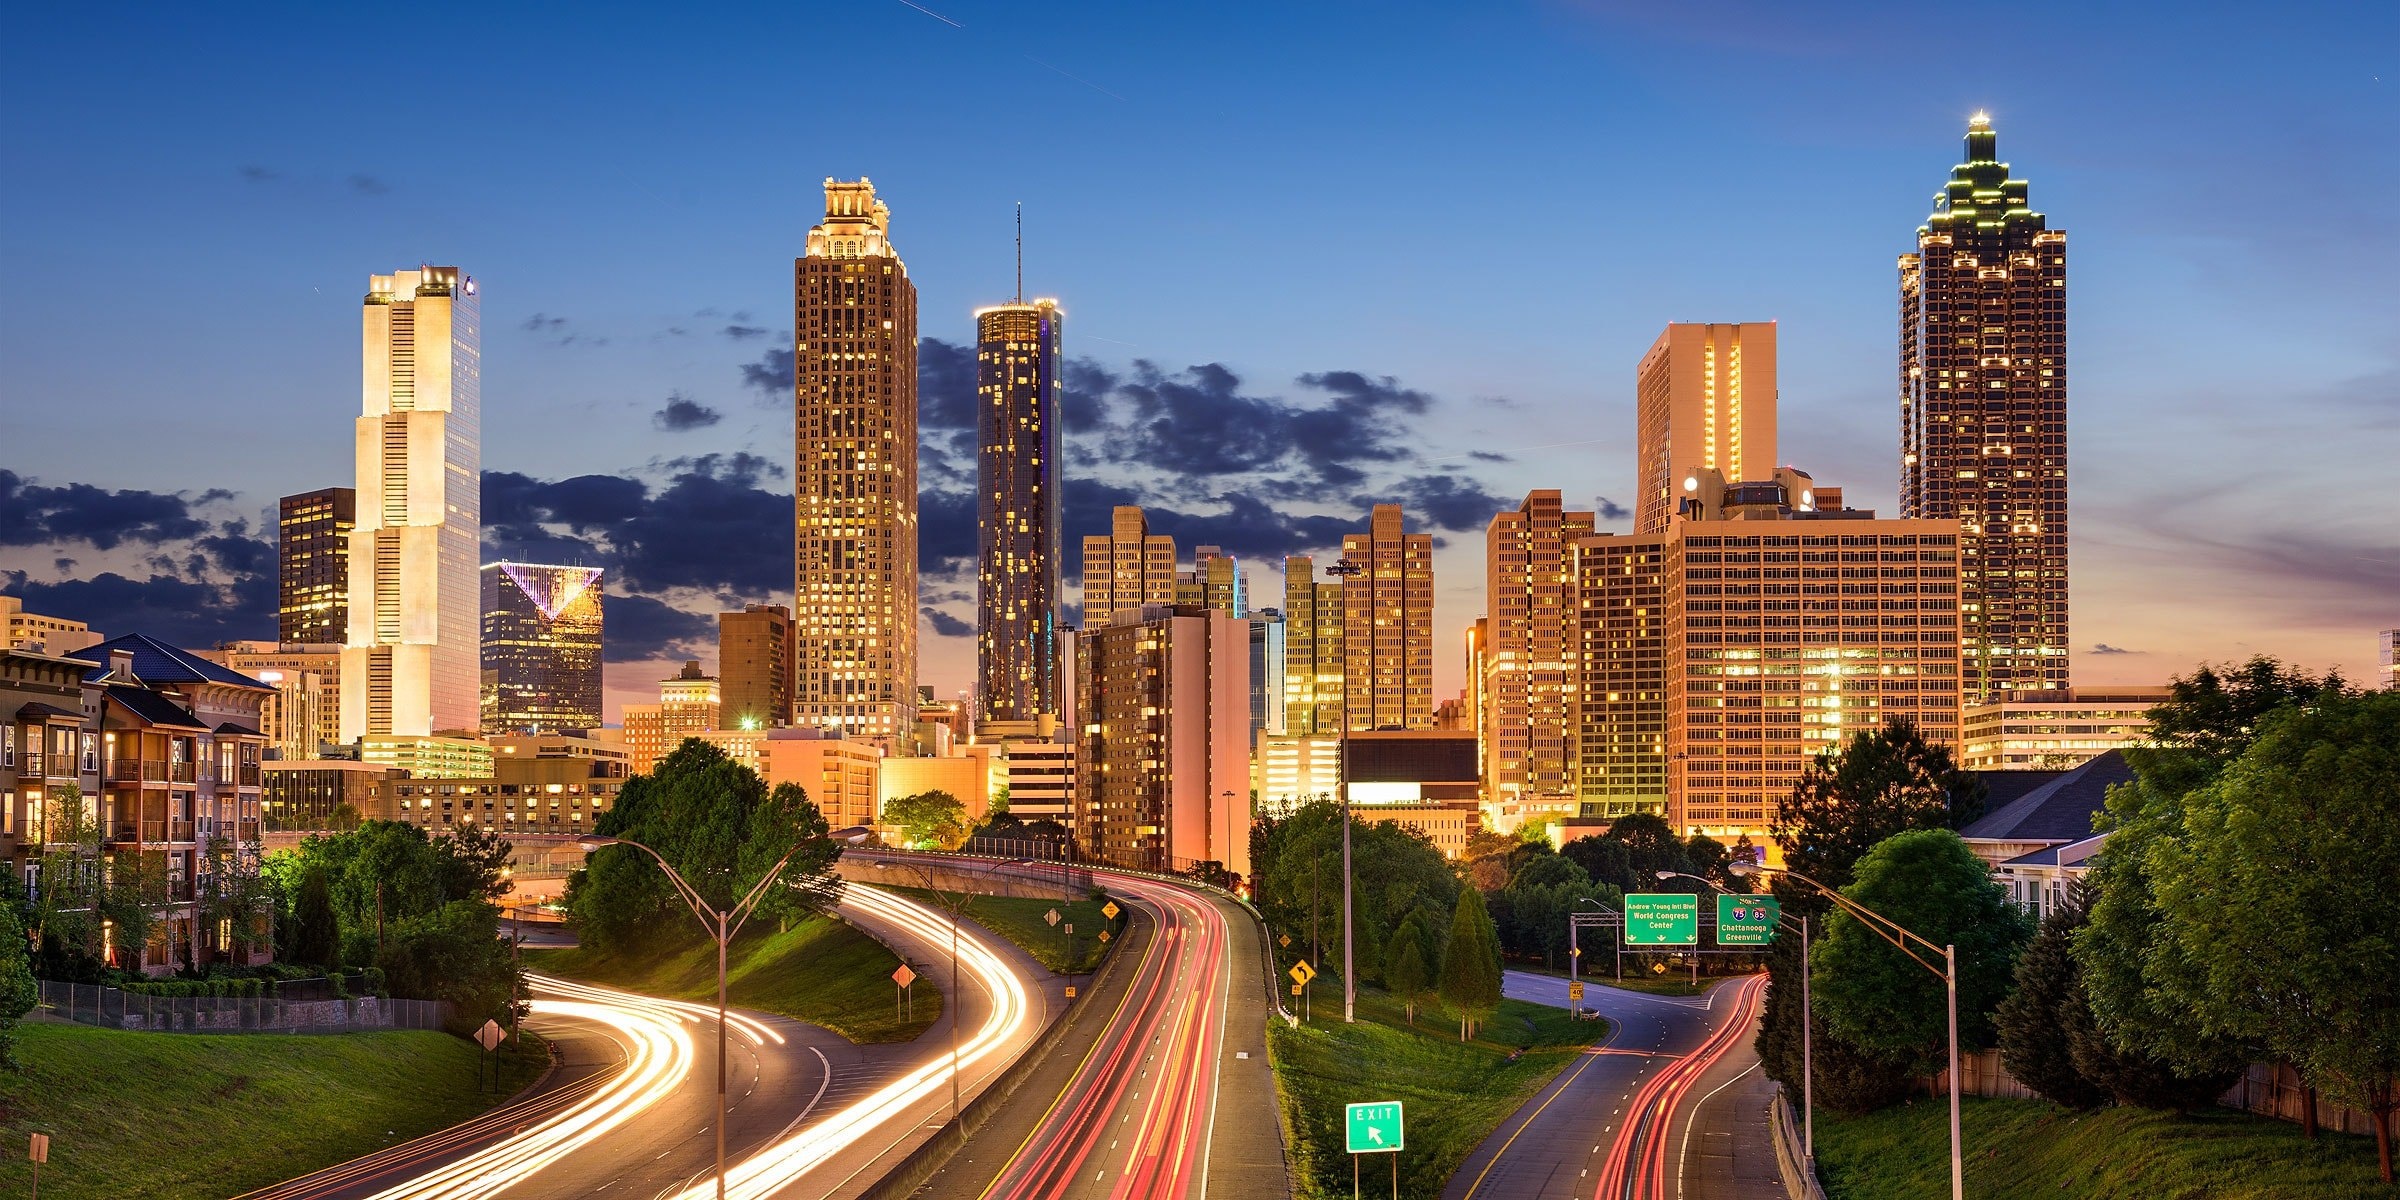 Atlanta skyline, Tourism desktop wallpaper, Travel to Atlanta, Southern travels, 2400x1200 Dual Screen Desktop